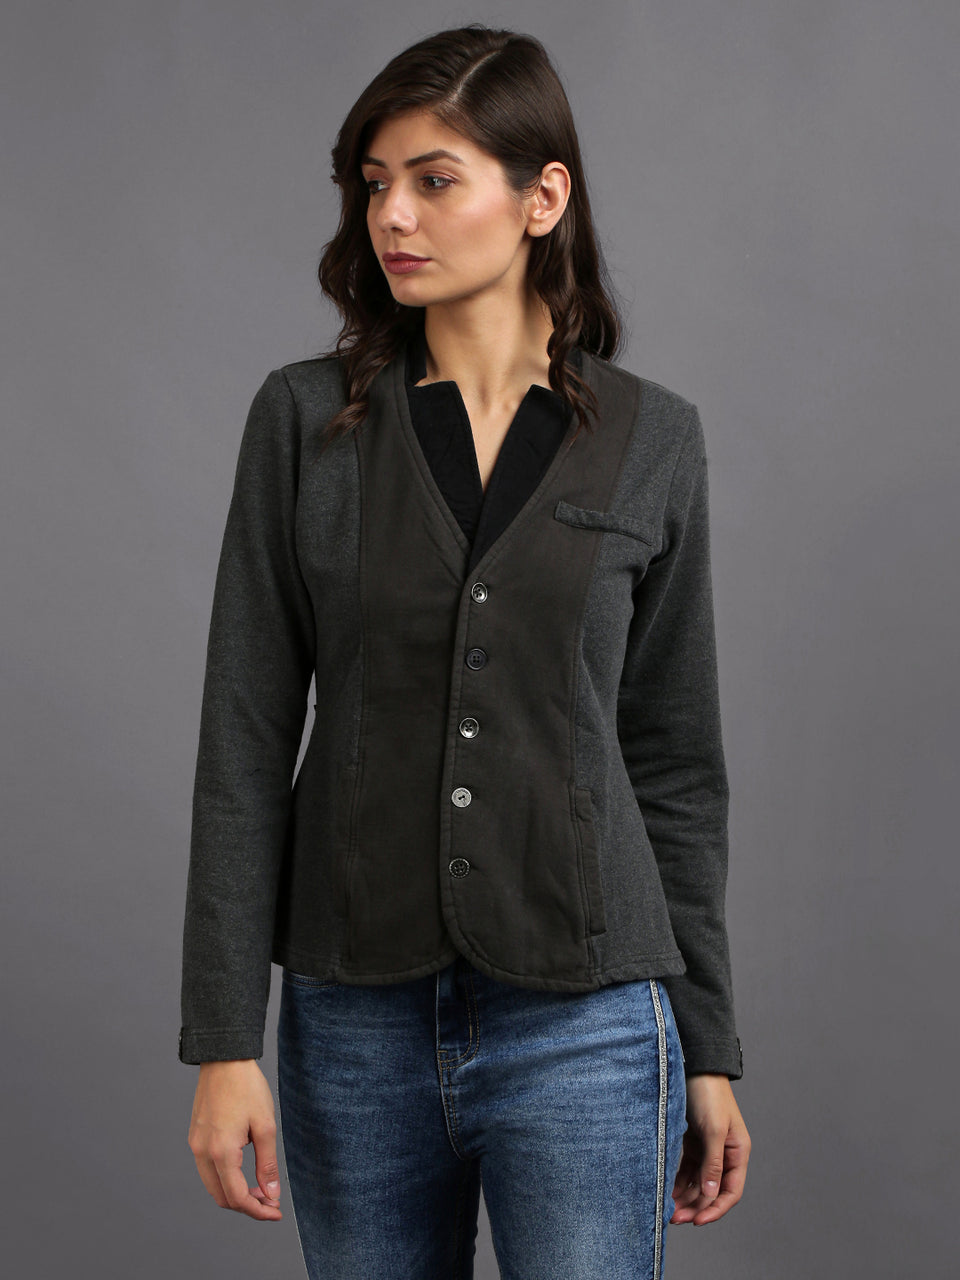 Buy Women Grey Solid Jacket Online in India - Monte Carlo